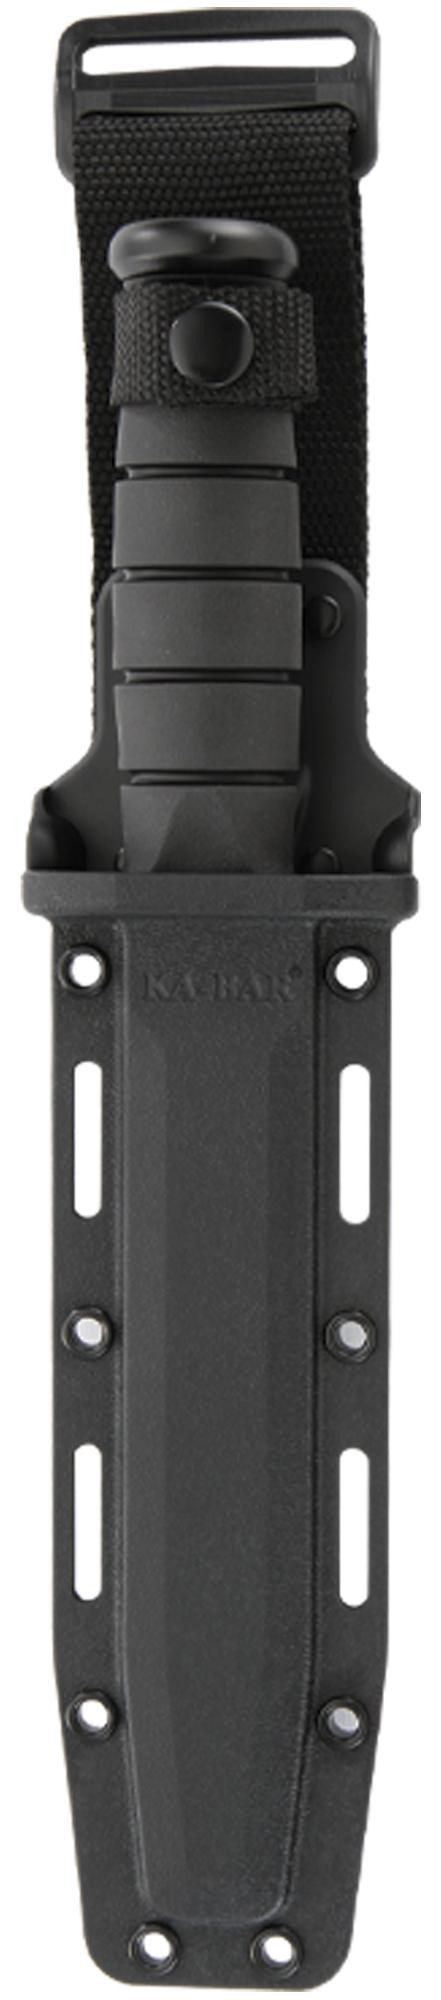 Ka-Bar 1216 Kydex Replacement Sheath Black/Glass Filled Fits Most 7" Blades 